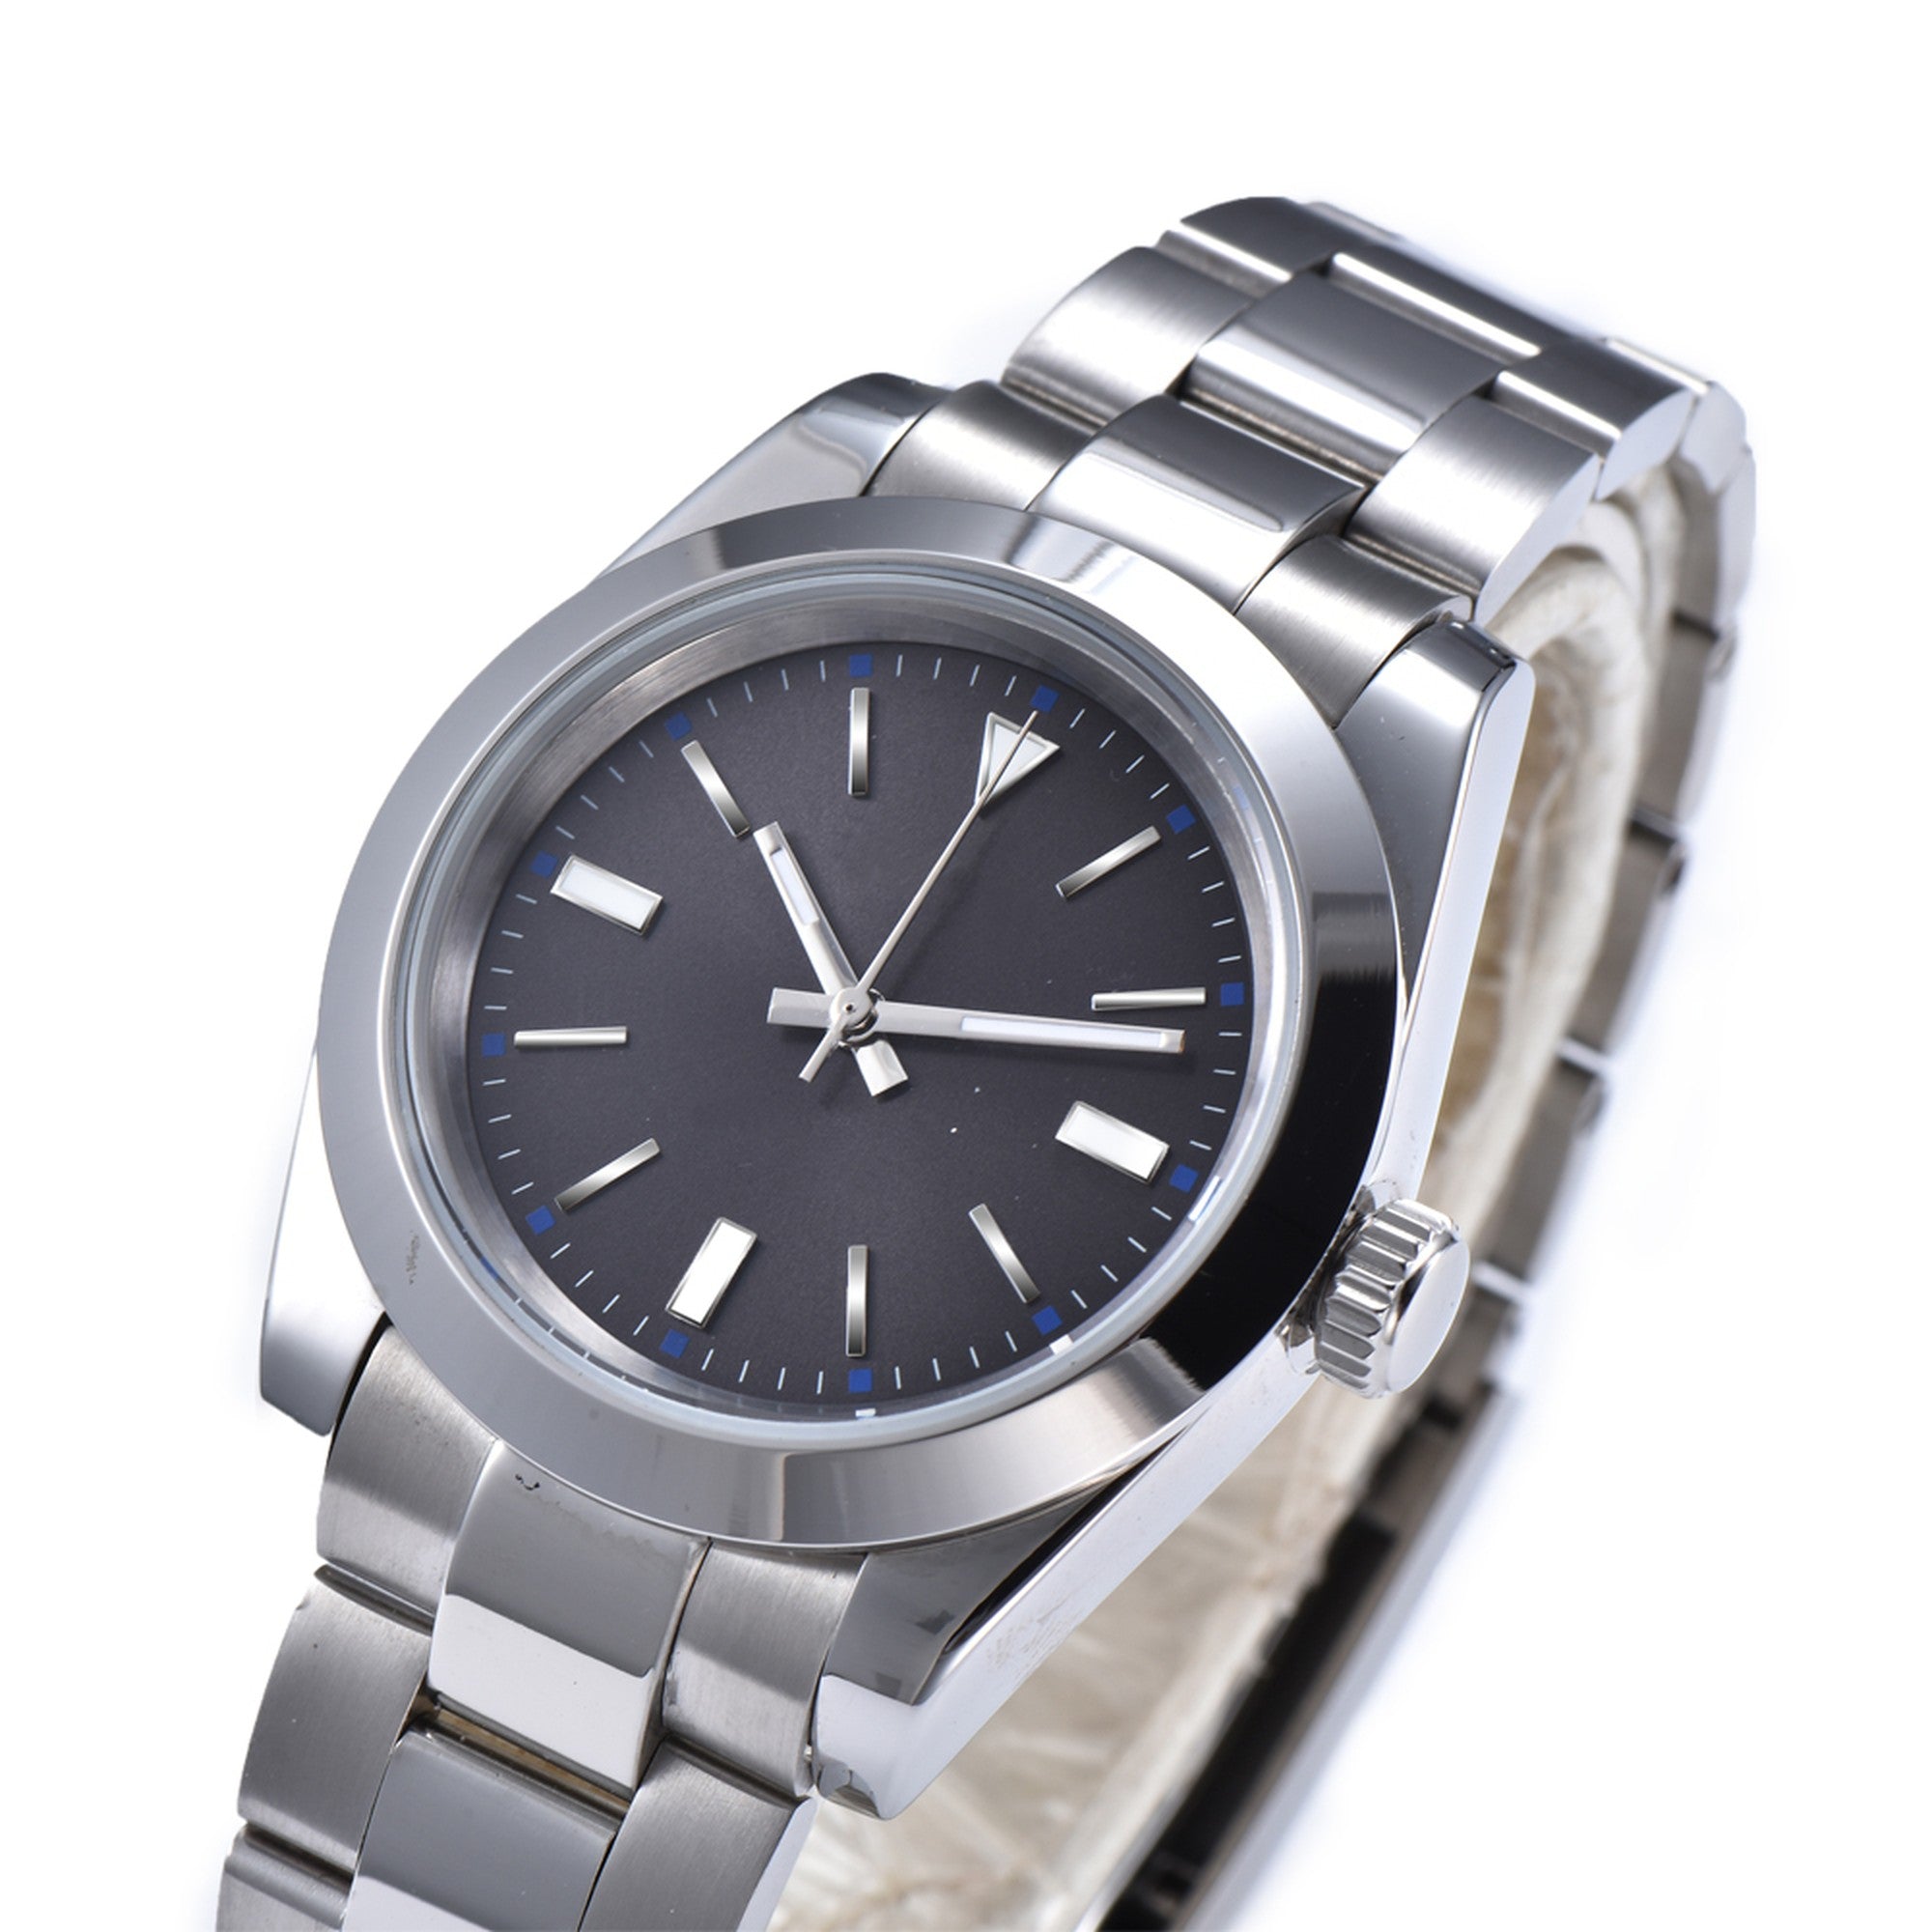 PARNIS Men's self-winding watch / high quality movement / Milgauss black / suit, popular luxury brand / waterproof